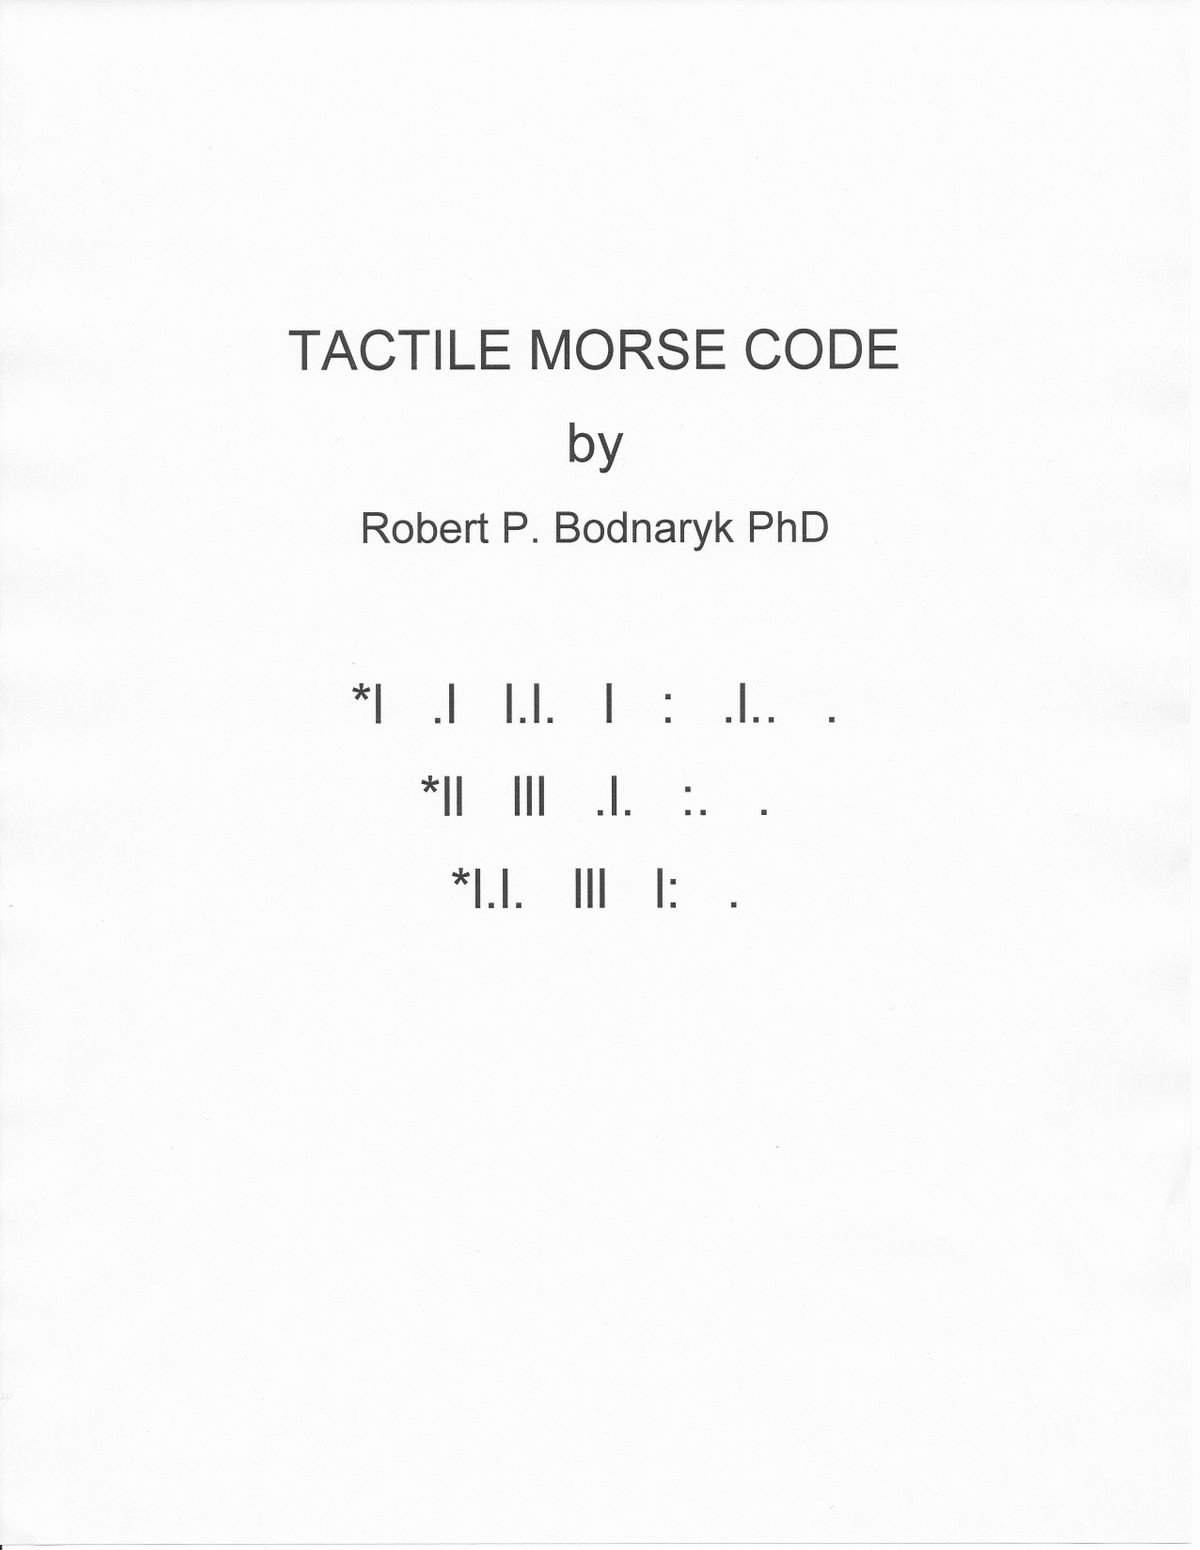 morse code reader software